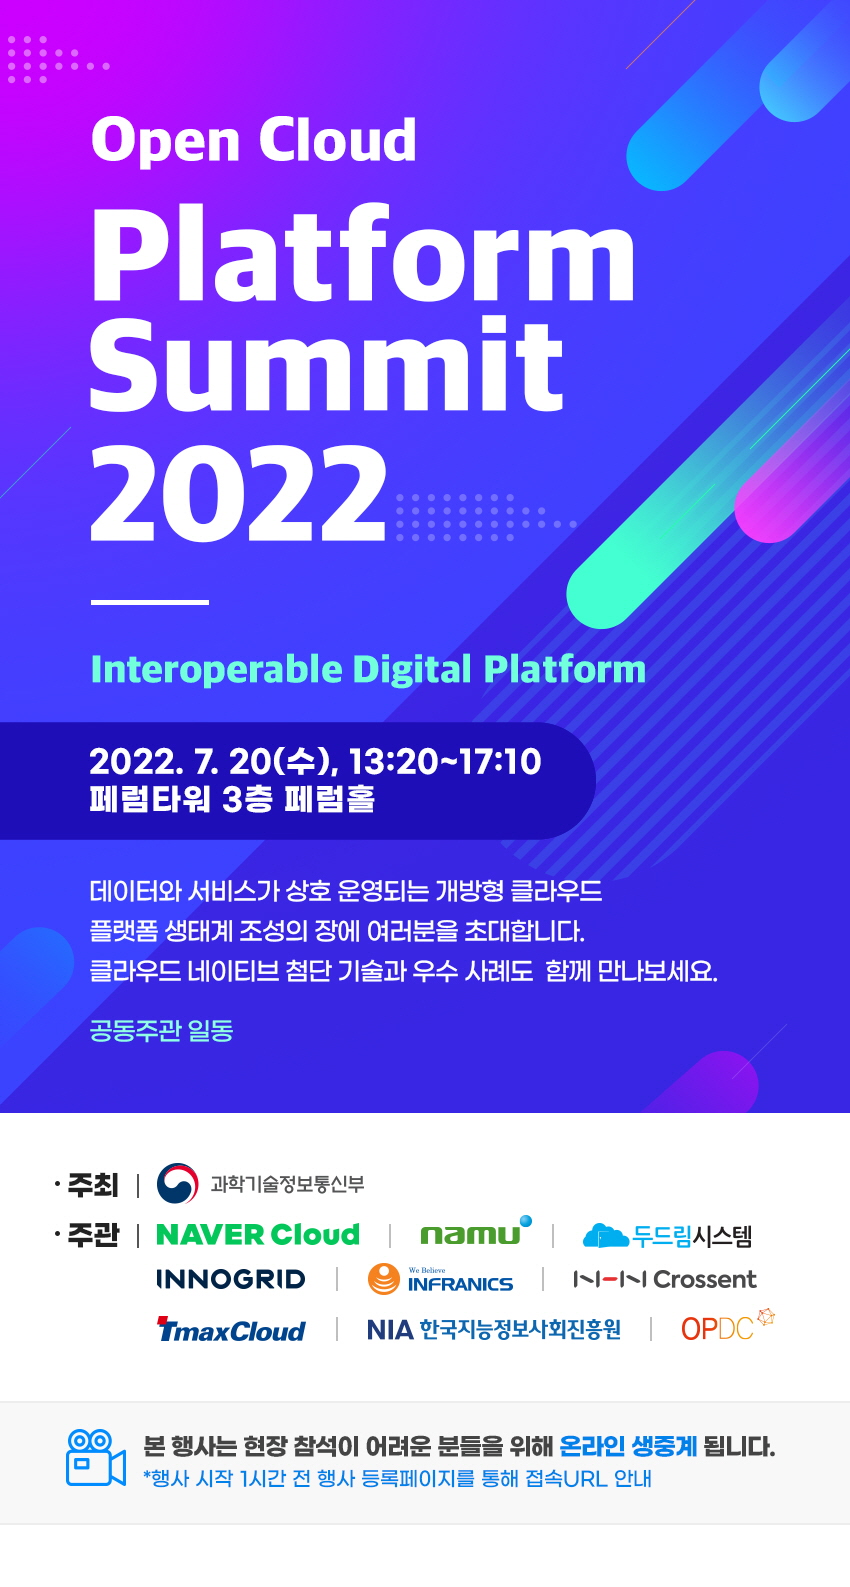 Open Cloud Platform Summit 2022 2022.7.20(tn),13:20~17:10 페럼타워 3층 페럼홀 데이터와 서비스가 상호 운영되는 개방형 클라우드 플랫폼 생태계 조성의 장에 여러분을 초대합니다. 클라우드 네이티브 첨단기술관 우수사례도 함께 만나보세요